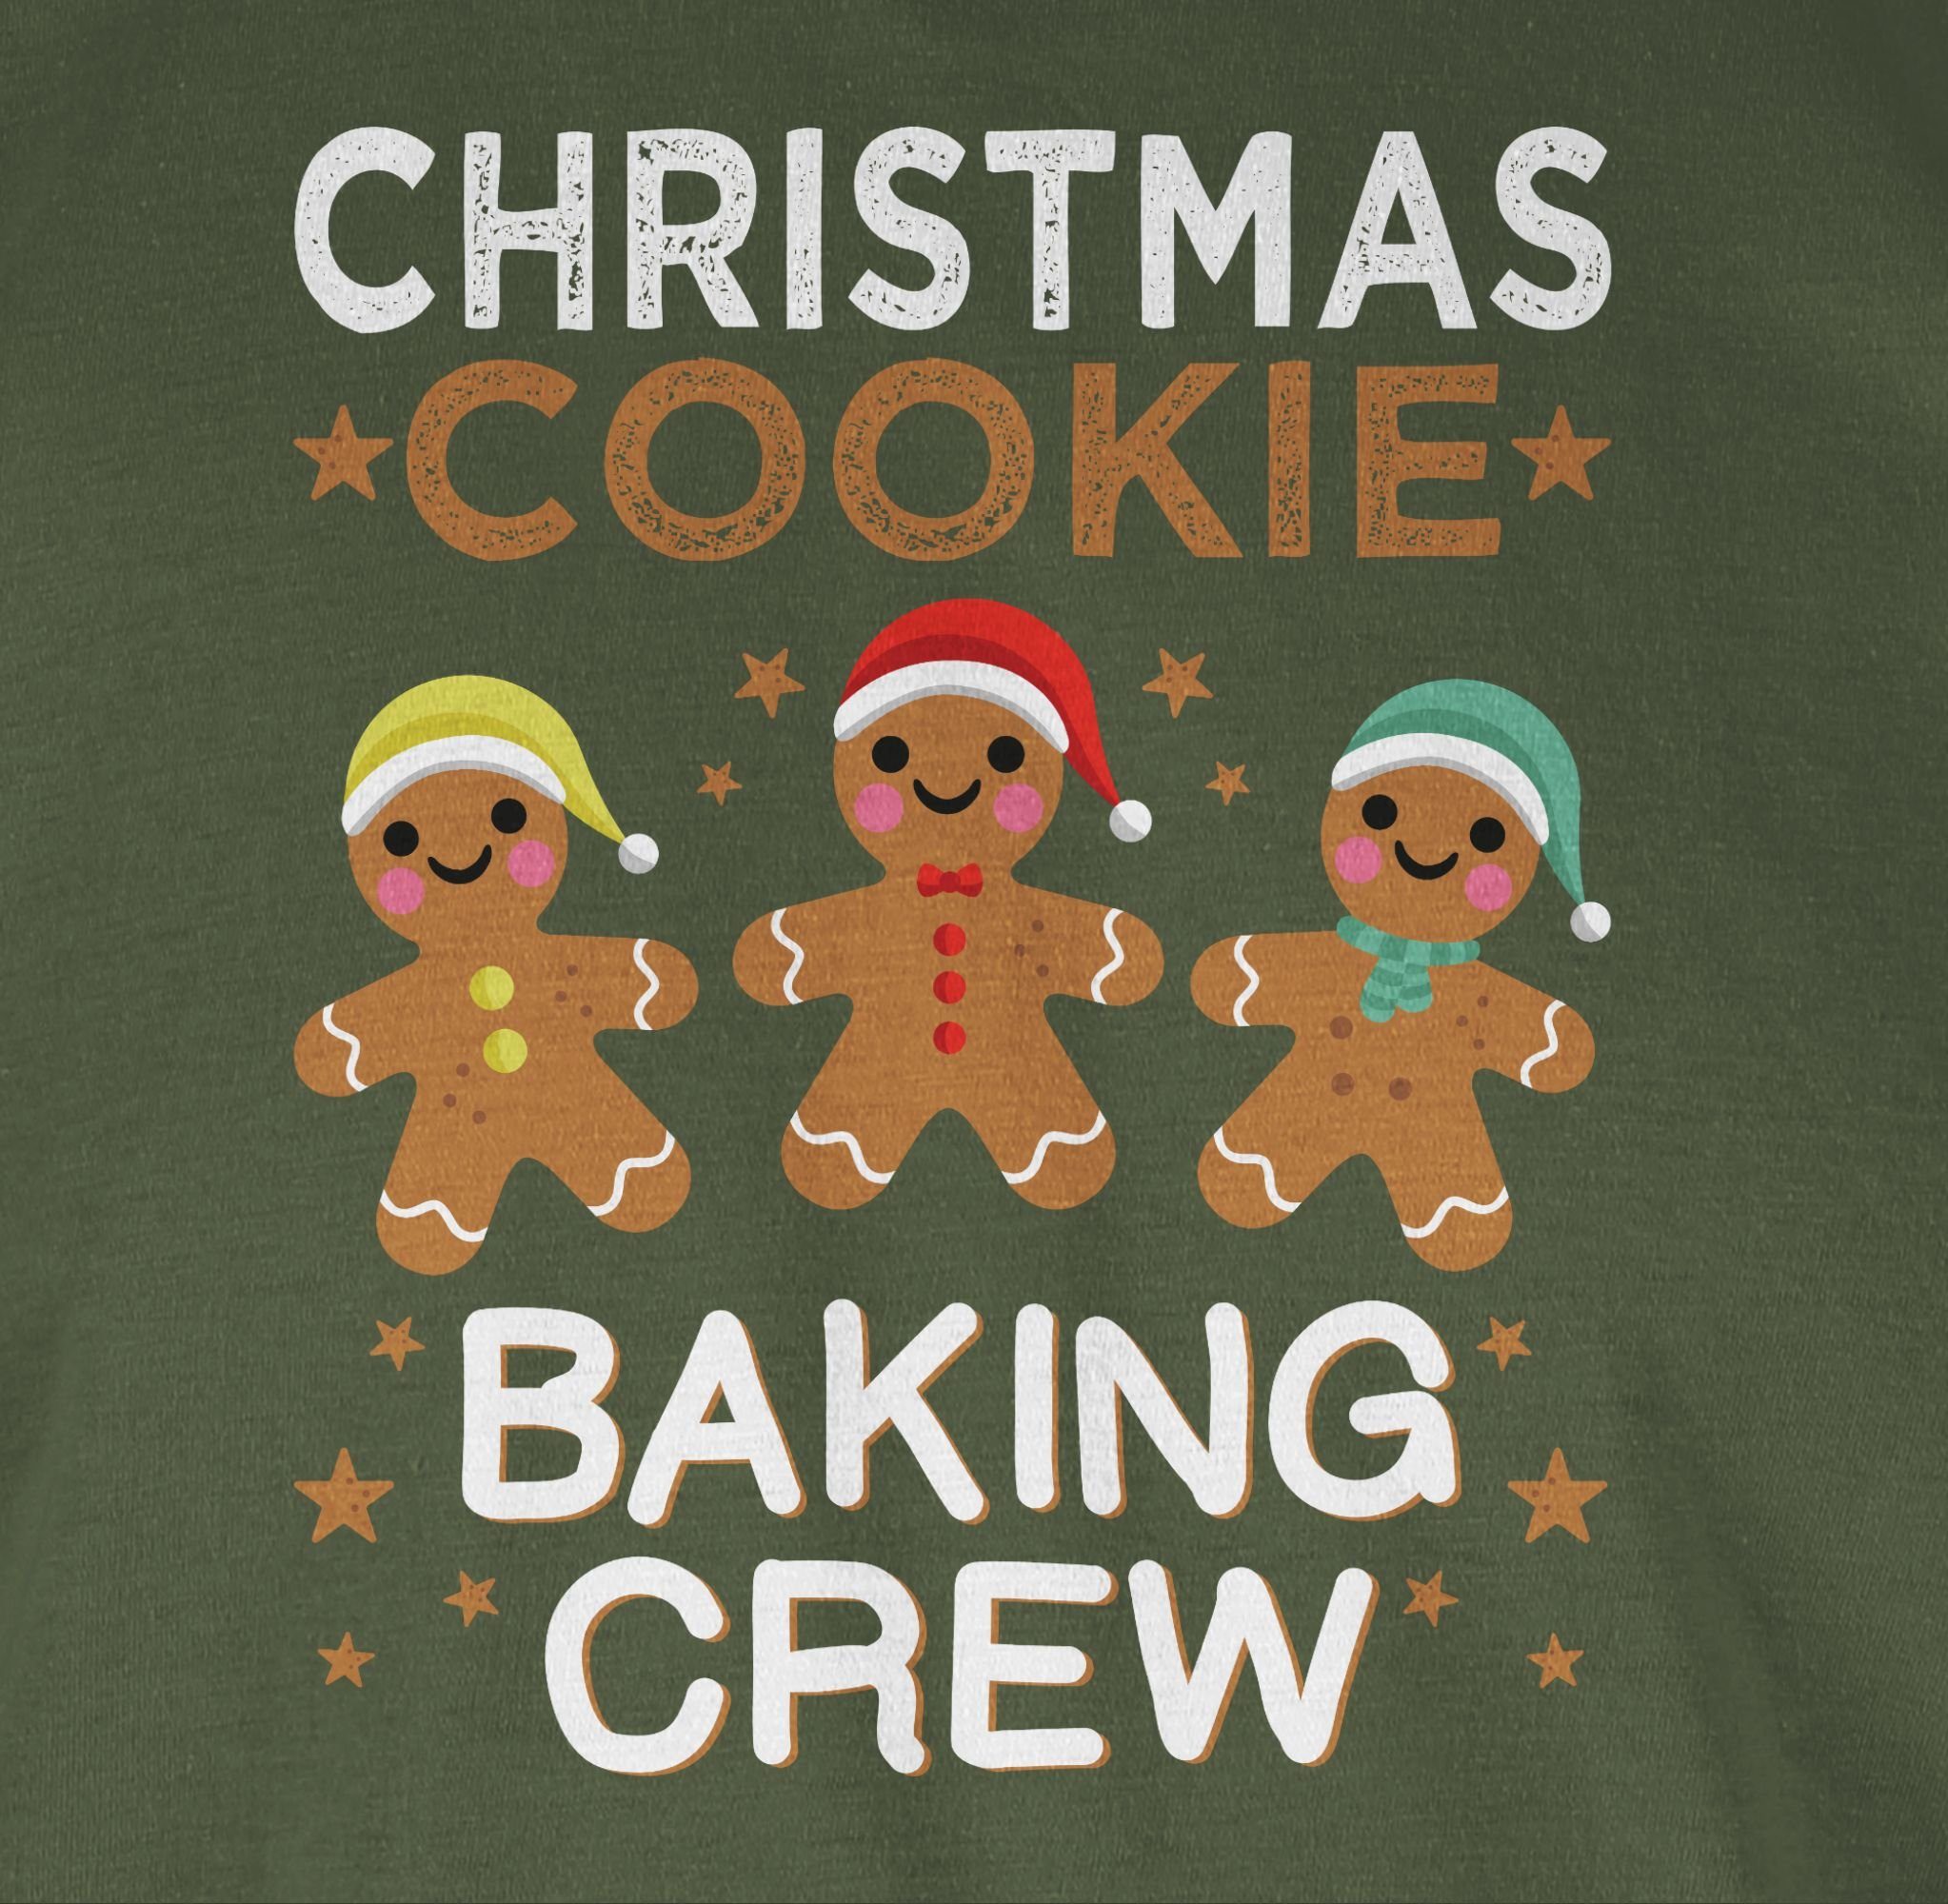 Weihachten 2 Crew T-Shirt Christmas Army Cookie Shirtracer Lebkuchenmännchen Kleidung Baking Grün